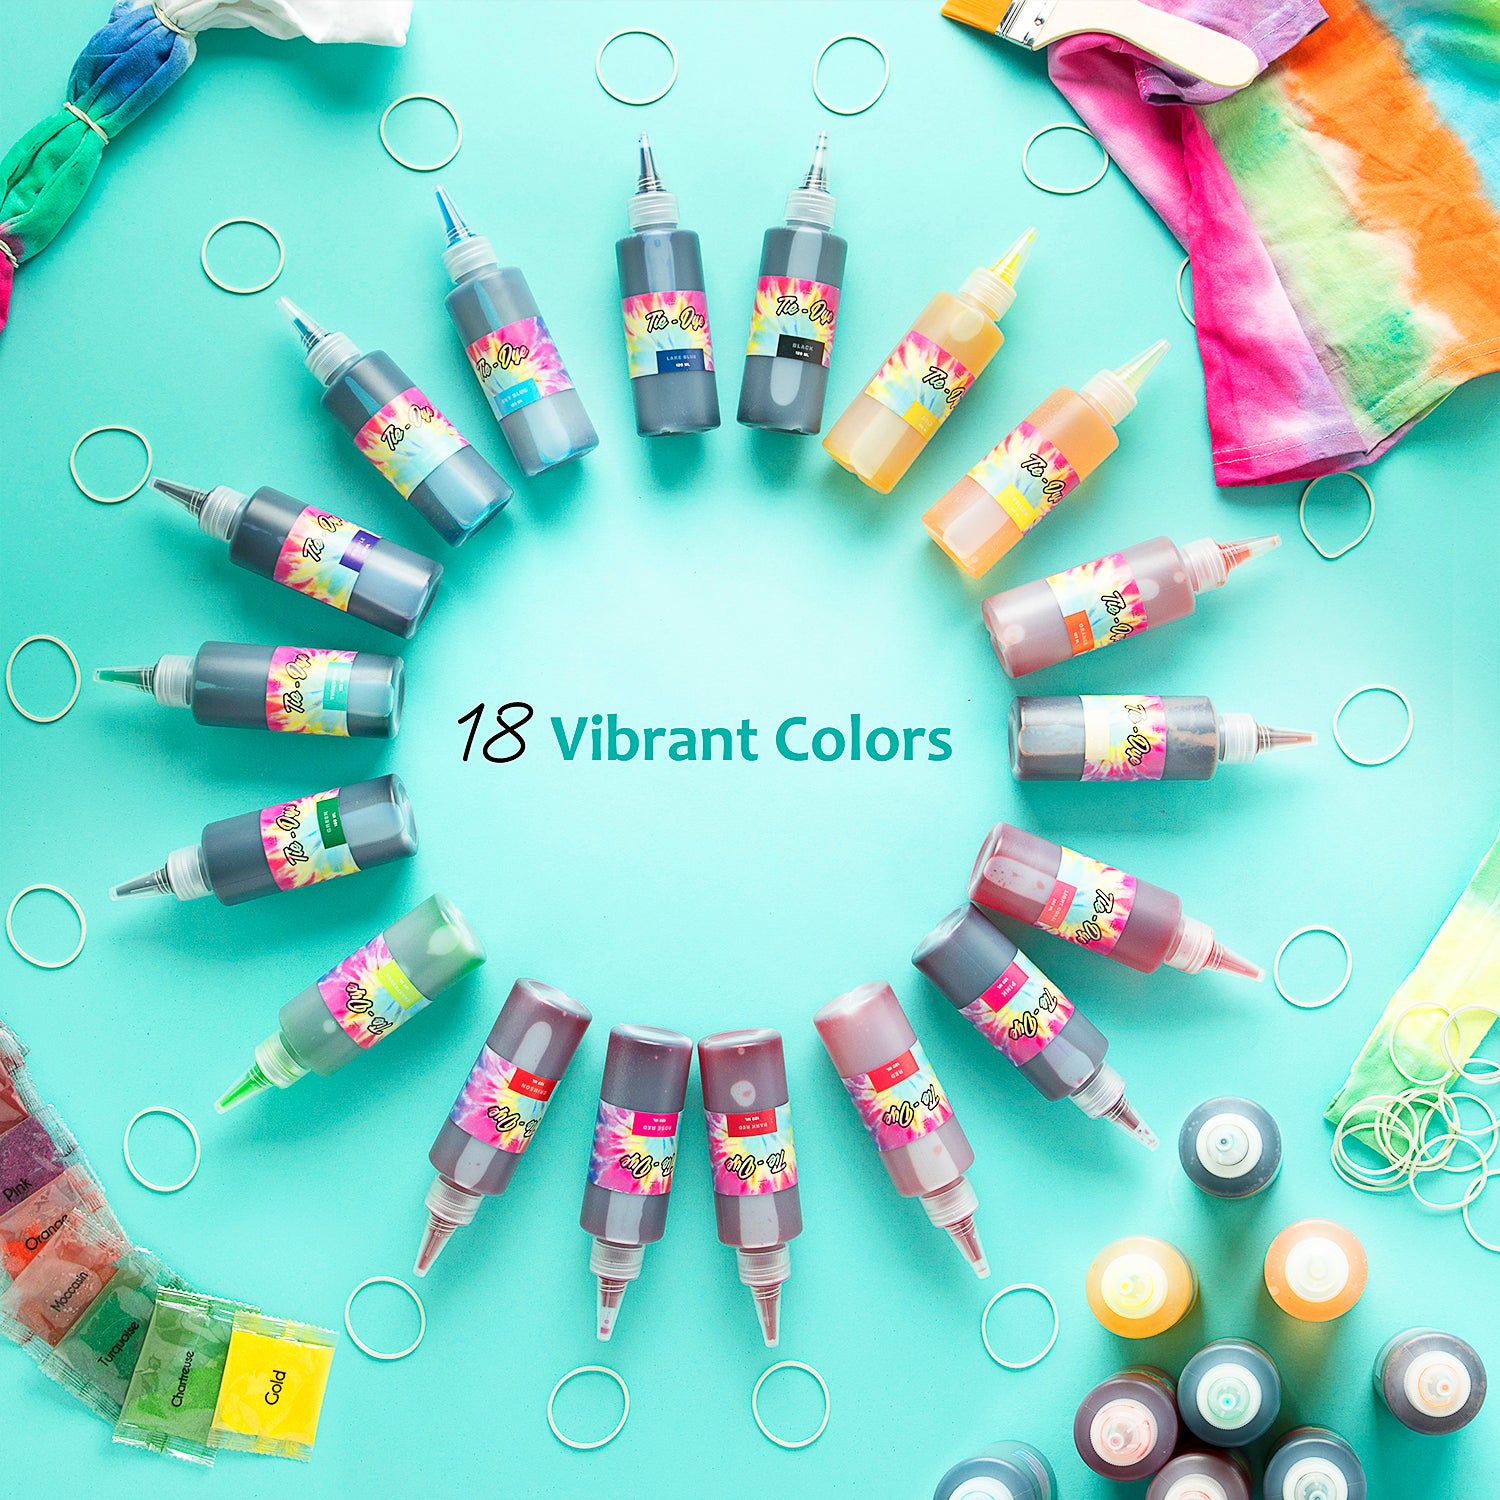 HTVRONT 8 Colors Tie Dye Kits Pre-Filled Bottles Tyedyedye Kit for Beginners, Men's, Size: Large